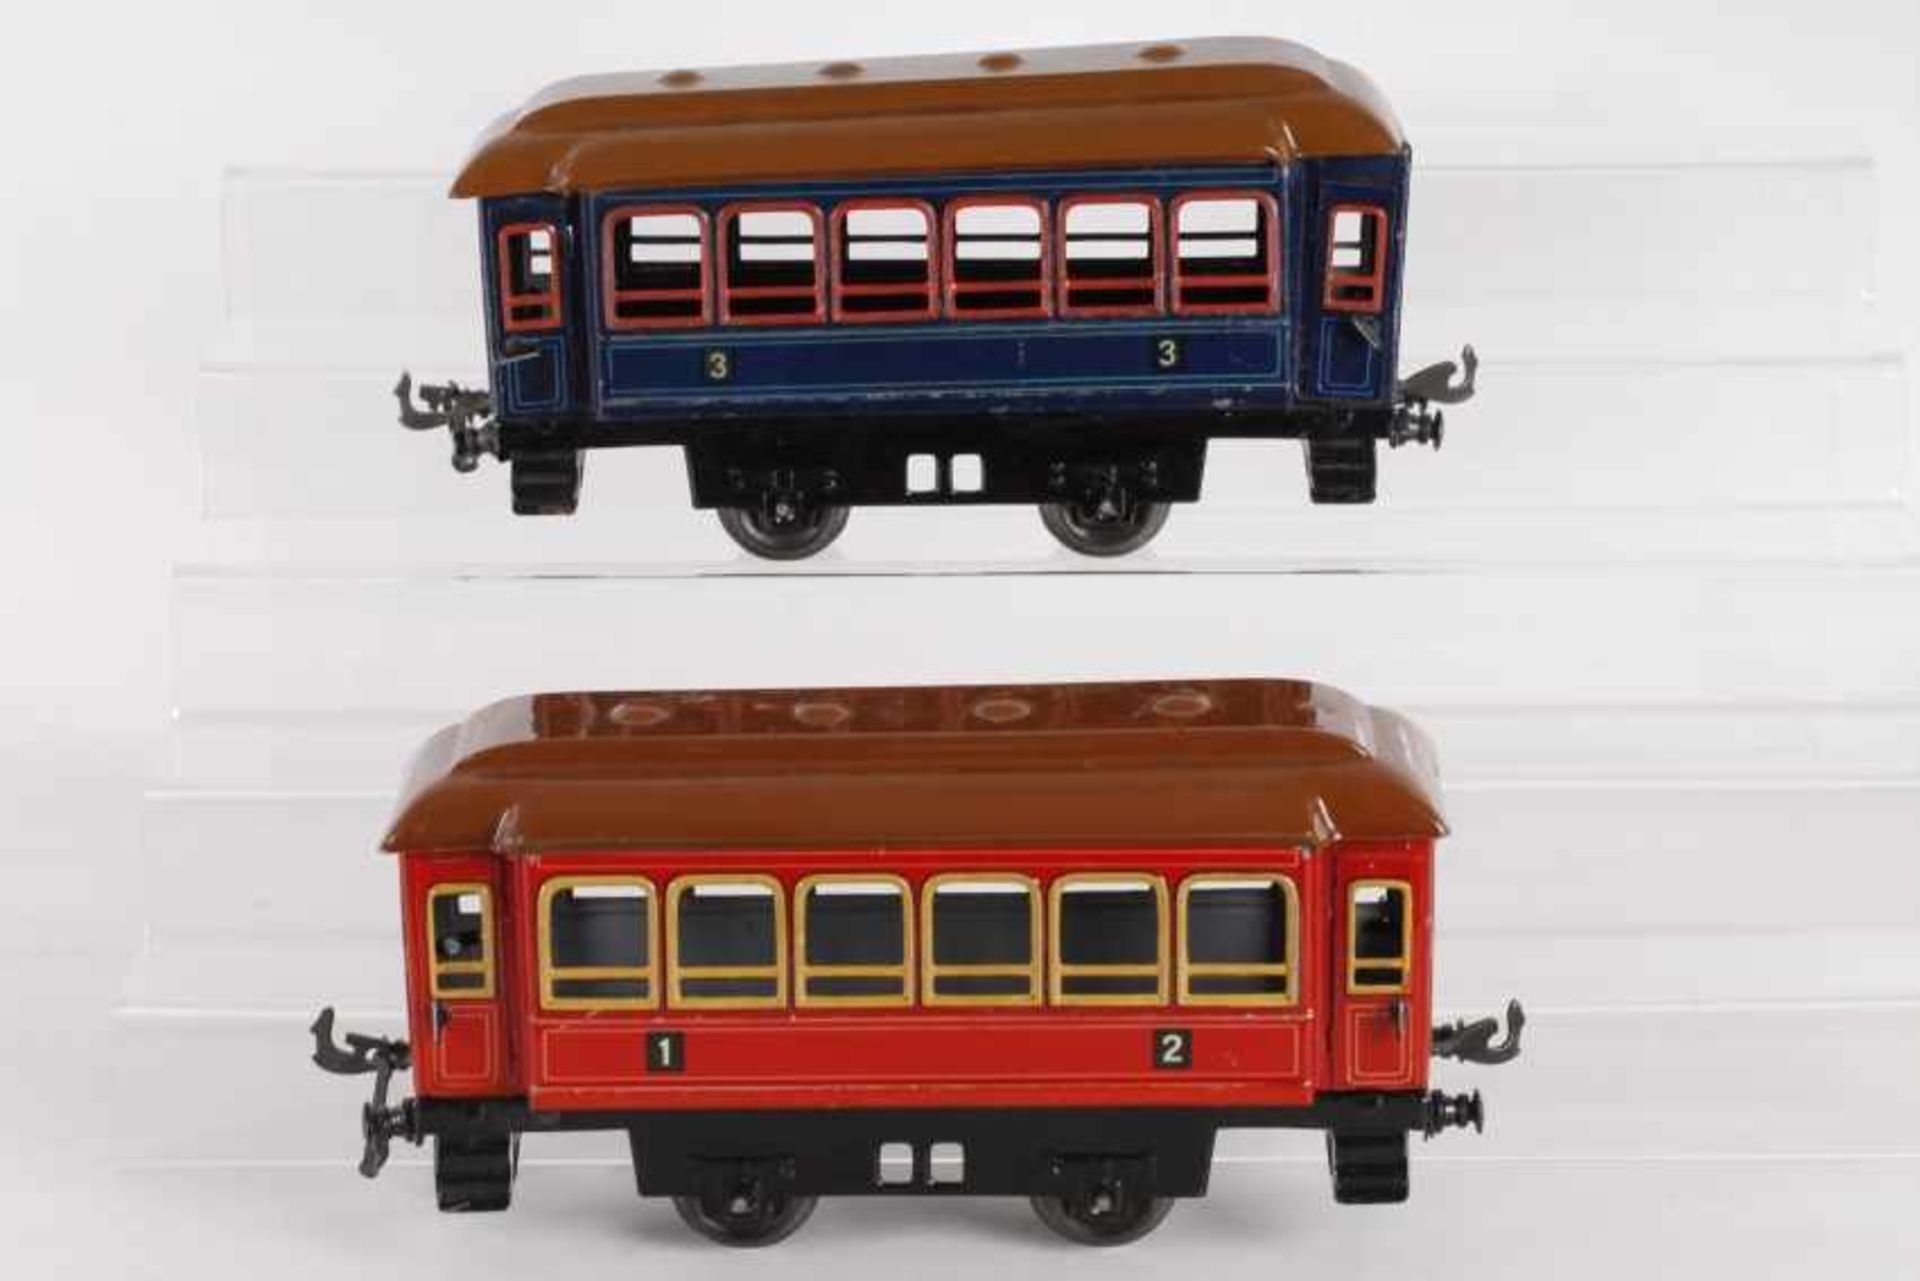 Zwei PersonenwagenZwei Personenwagen, Bing, 1./2. Klasse, rot, Bub, 3. Klasse, blau, 20 cm lang, aus